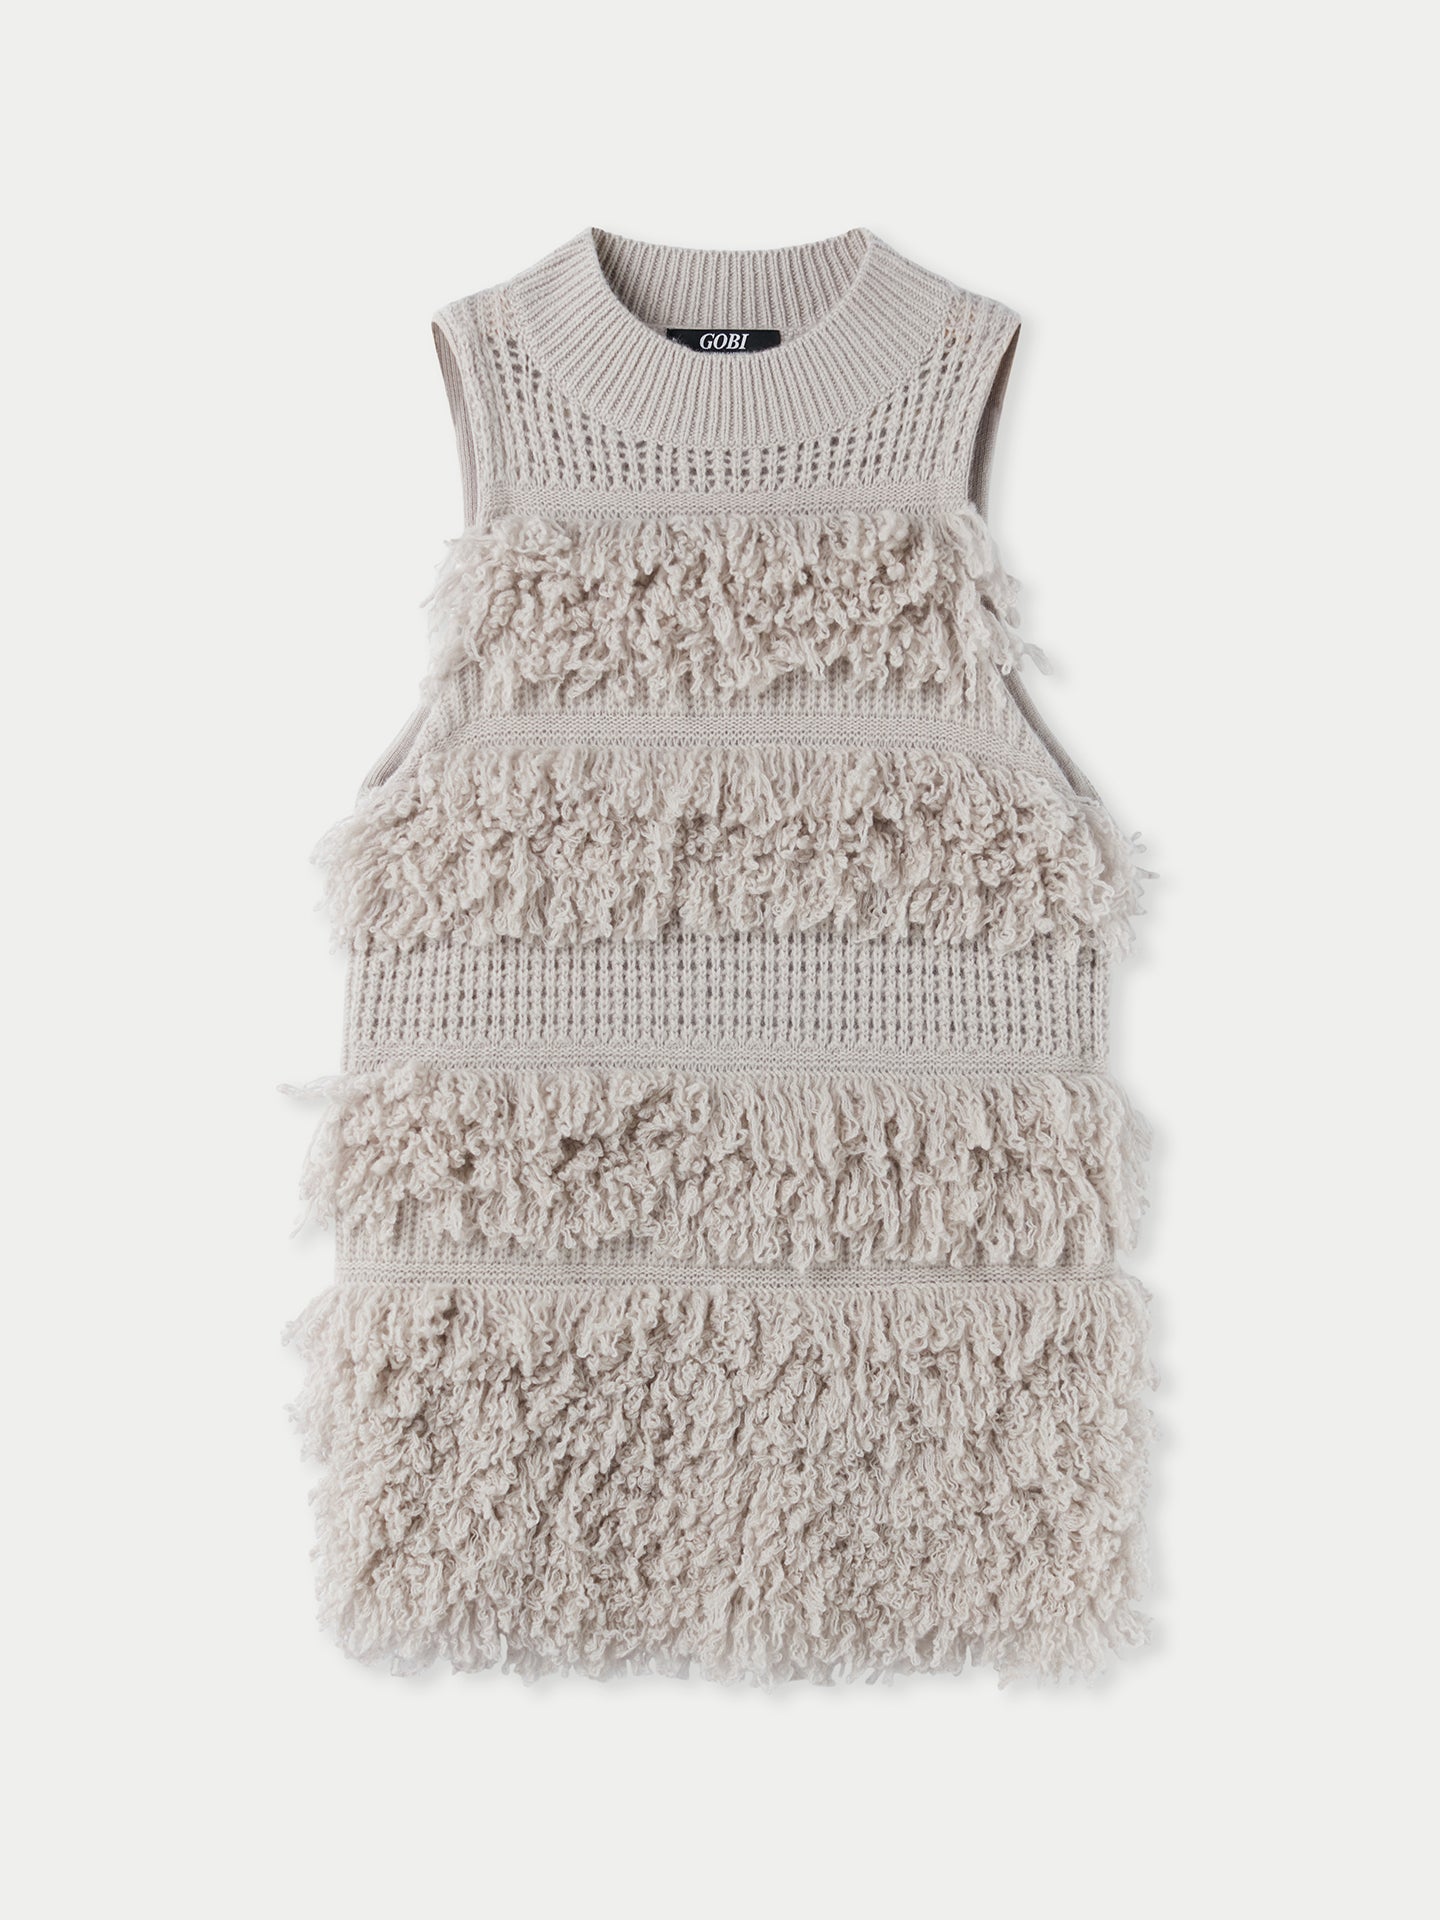 Women's Loop-Stitch Cashmere Vest Chateau Gray - Gobi Cashmere